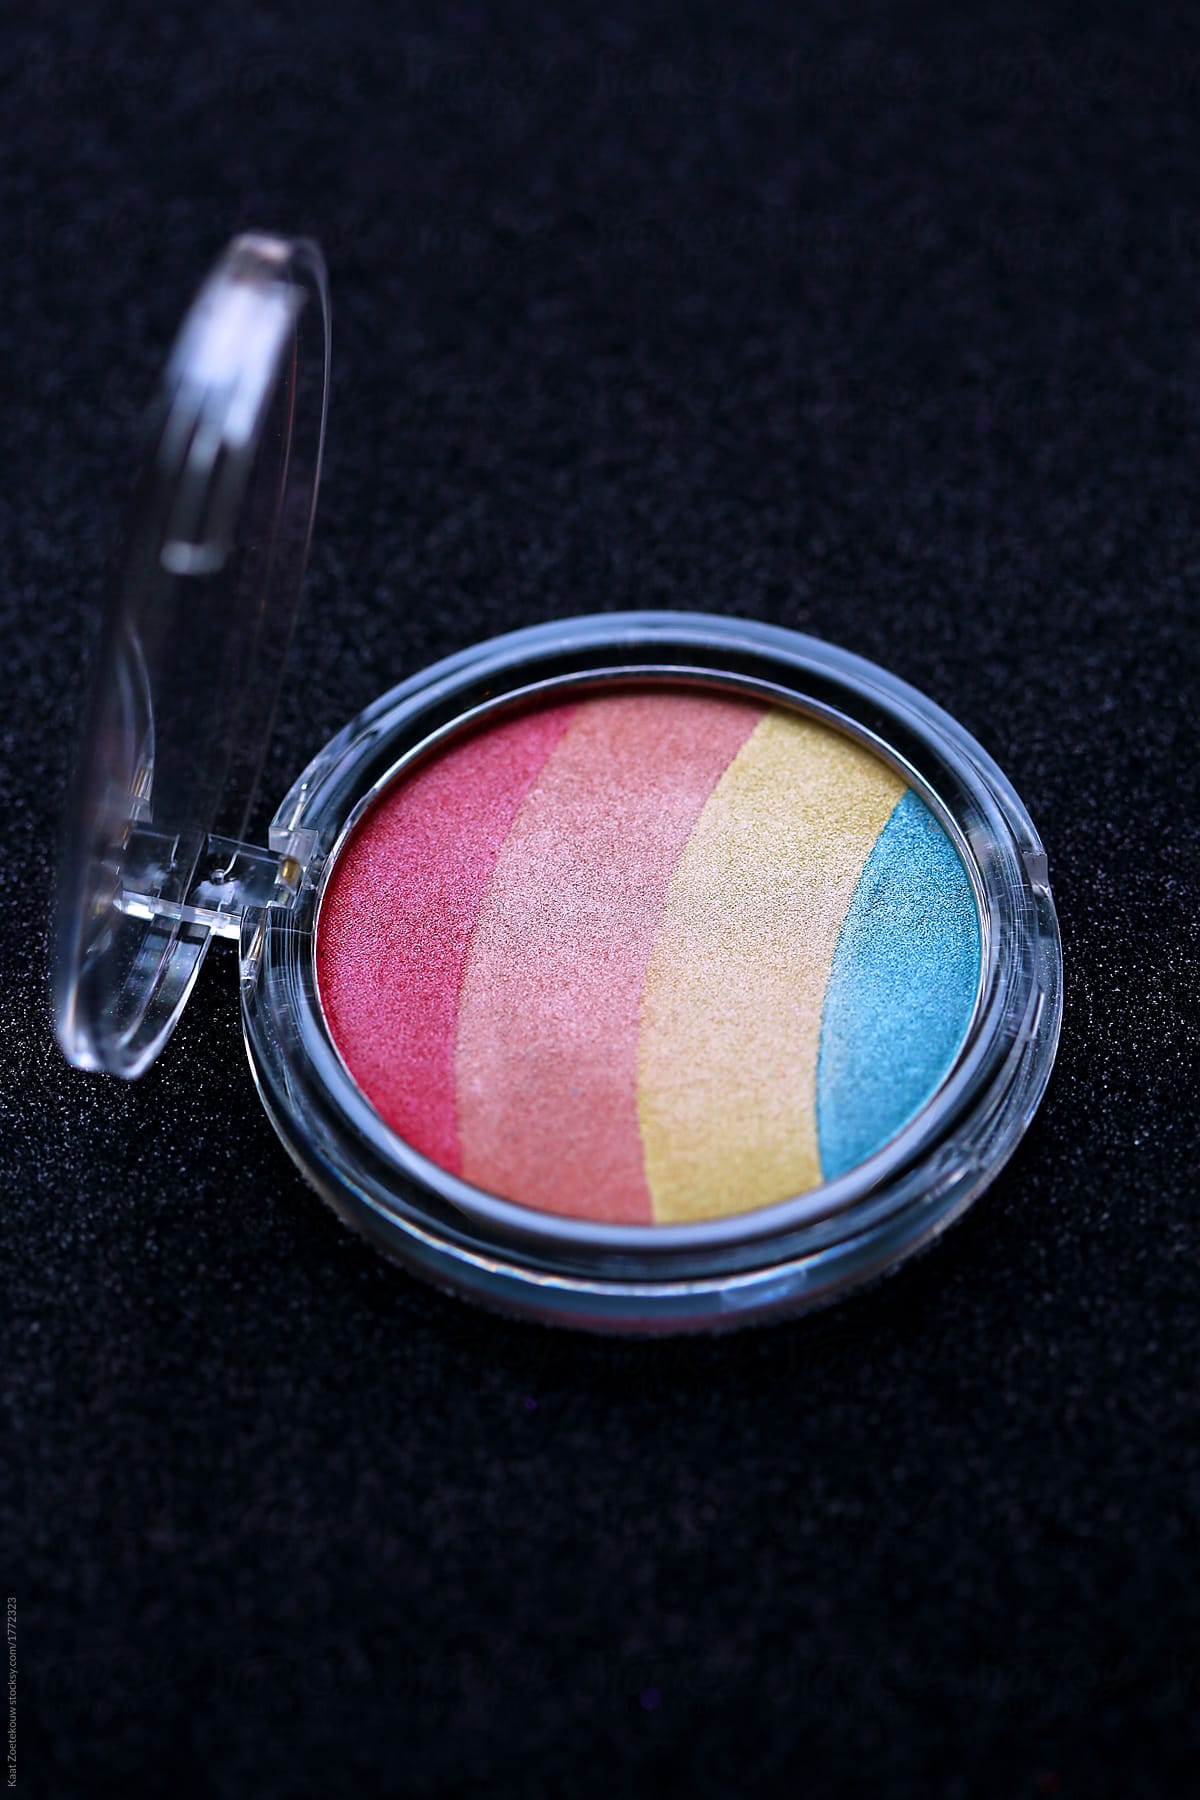 Rainbow highlighter or eyeshadow palette